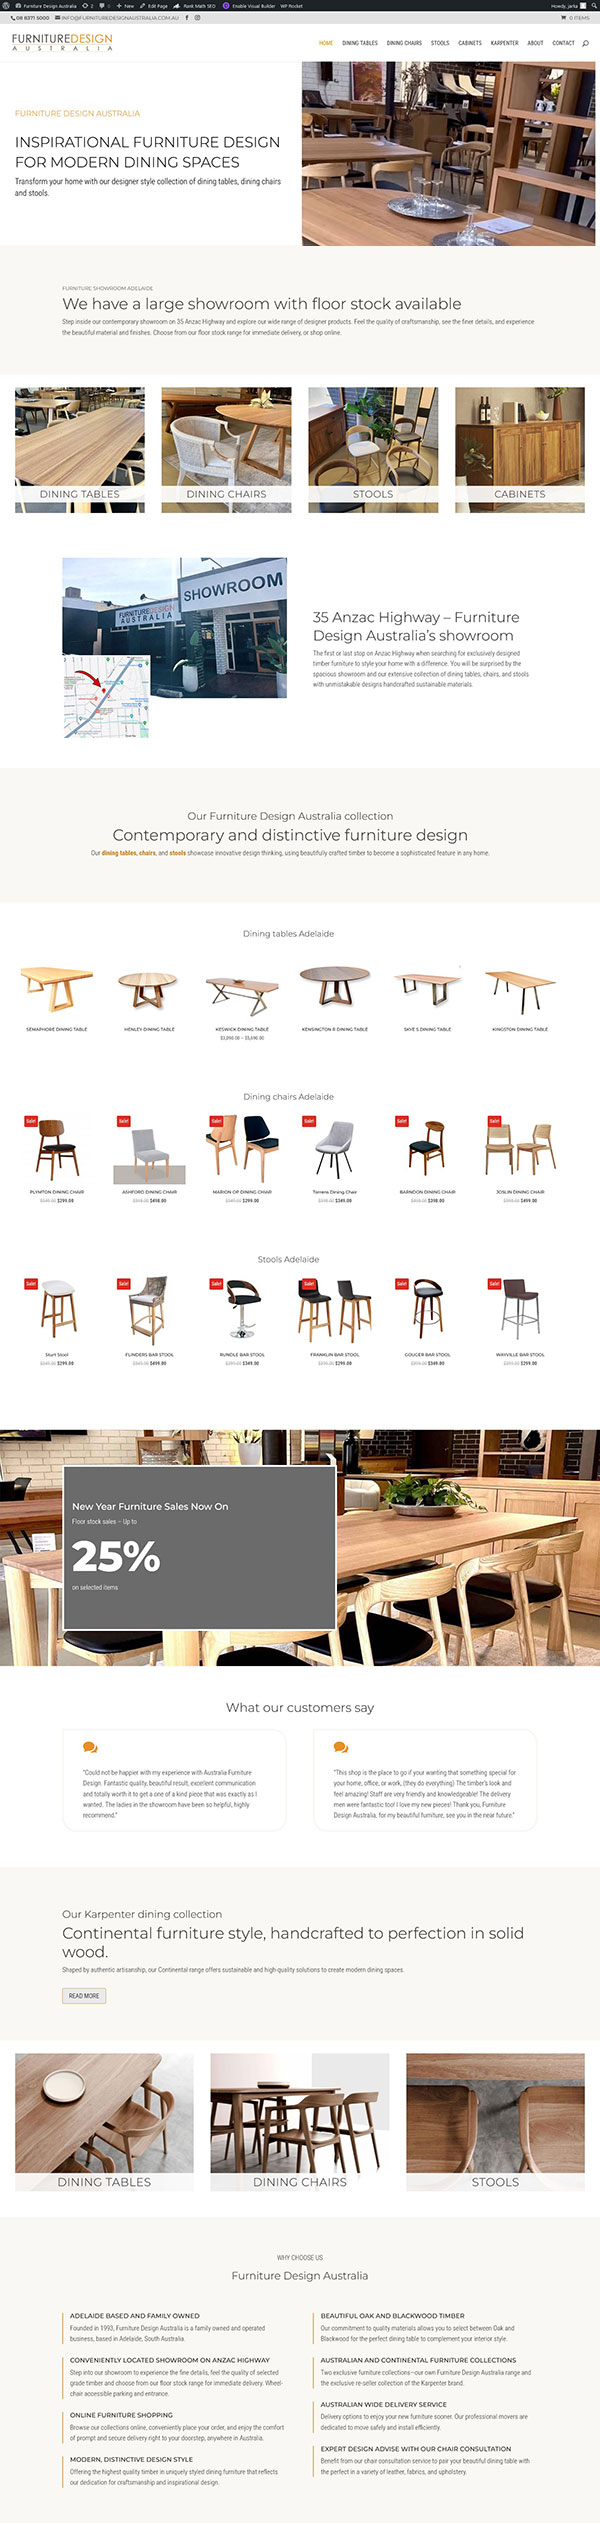 Website Design for furniture store Adelaide